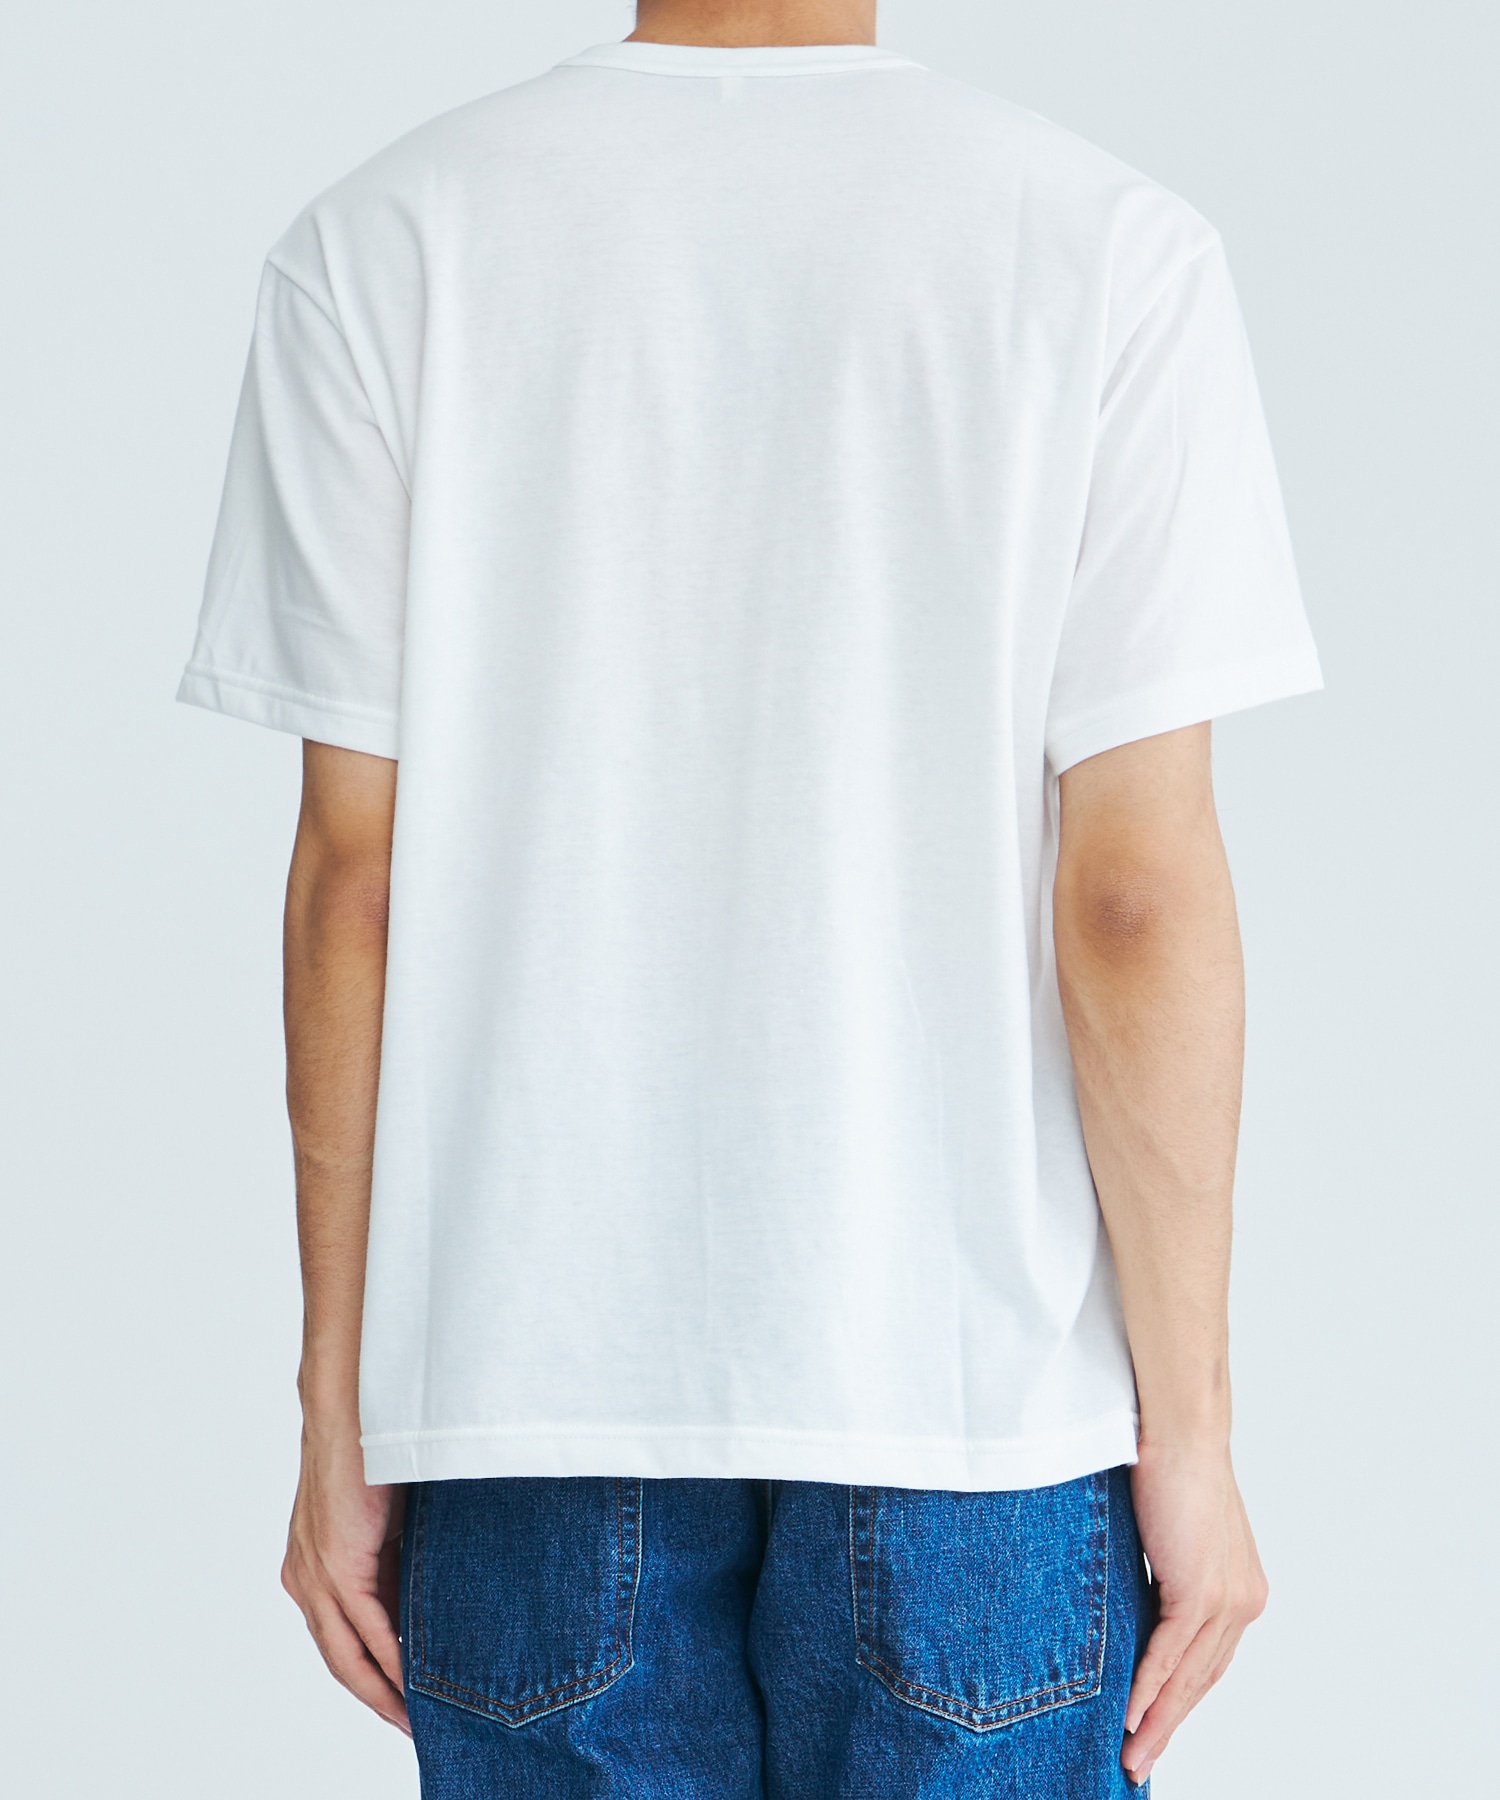 KHOKI / VYG shirt (TYPE-B) (23ss-t-01-B) 【特価】 www.sweatbrasil